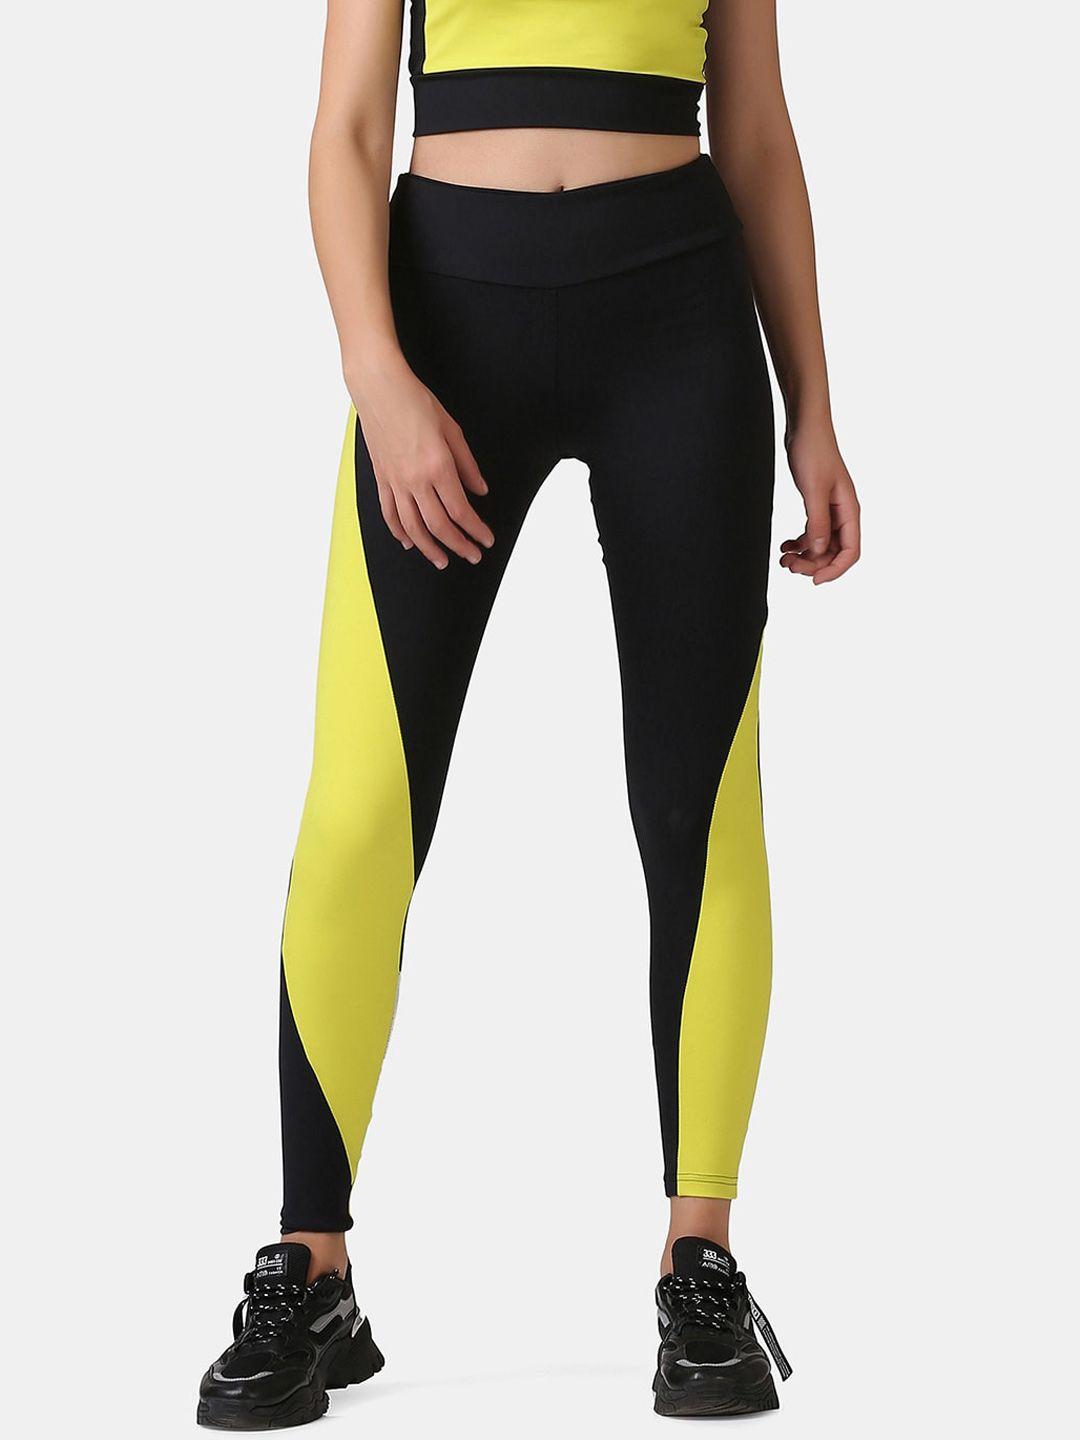 aesthetic bodies women black & yellow colourblocked sports tights